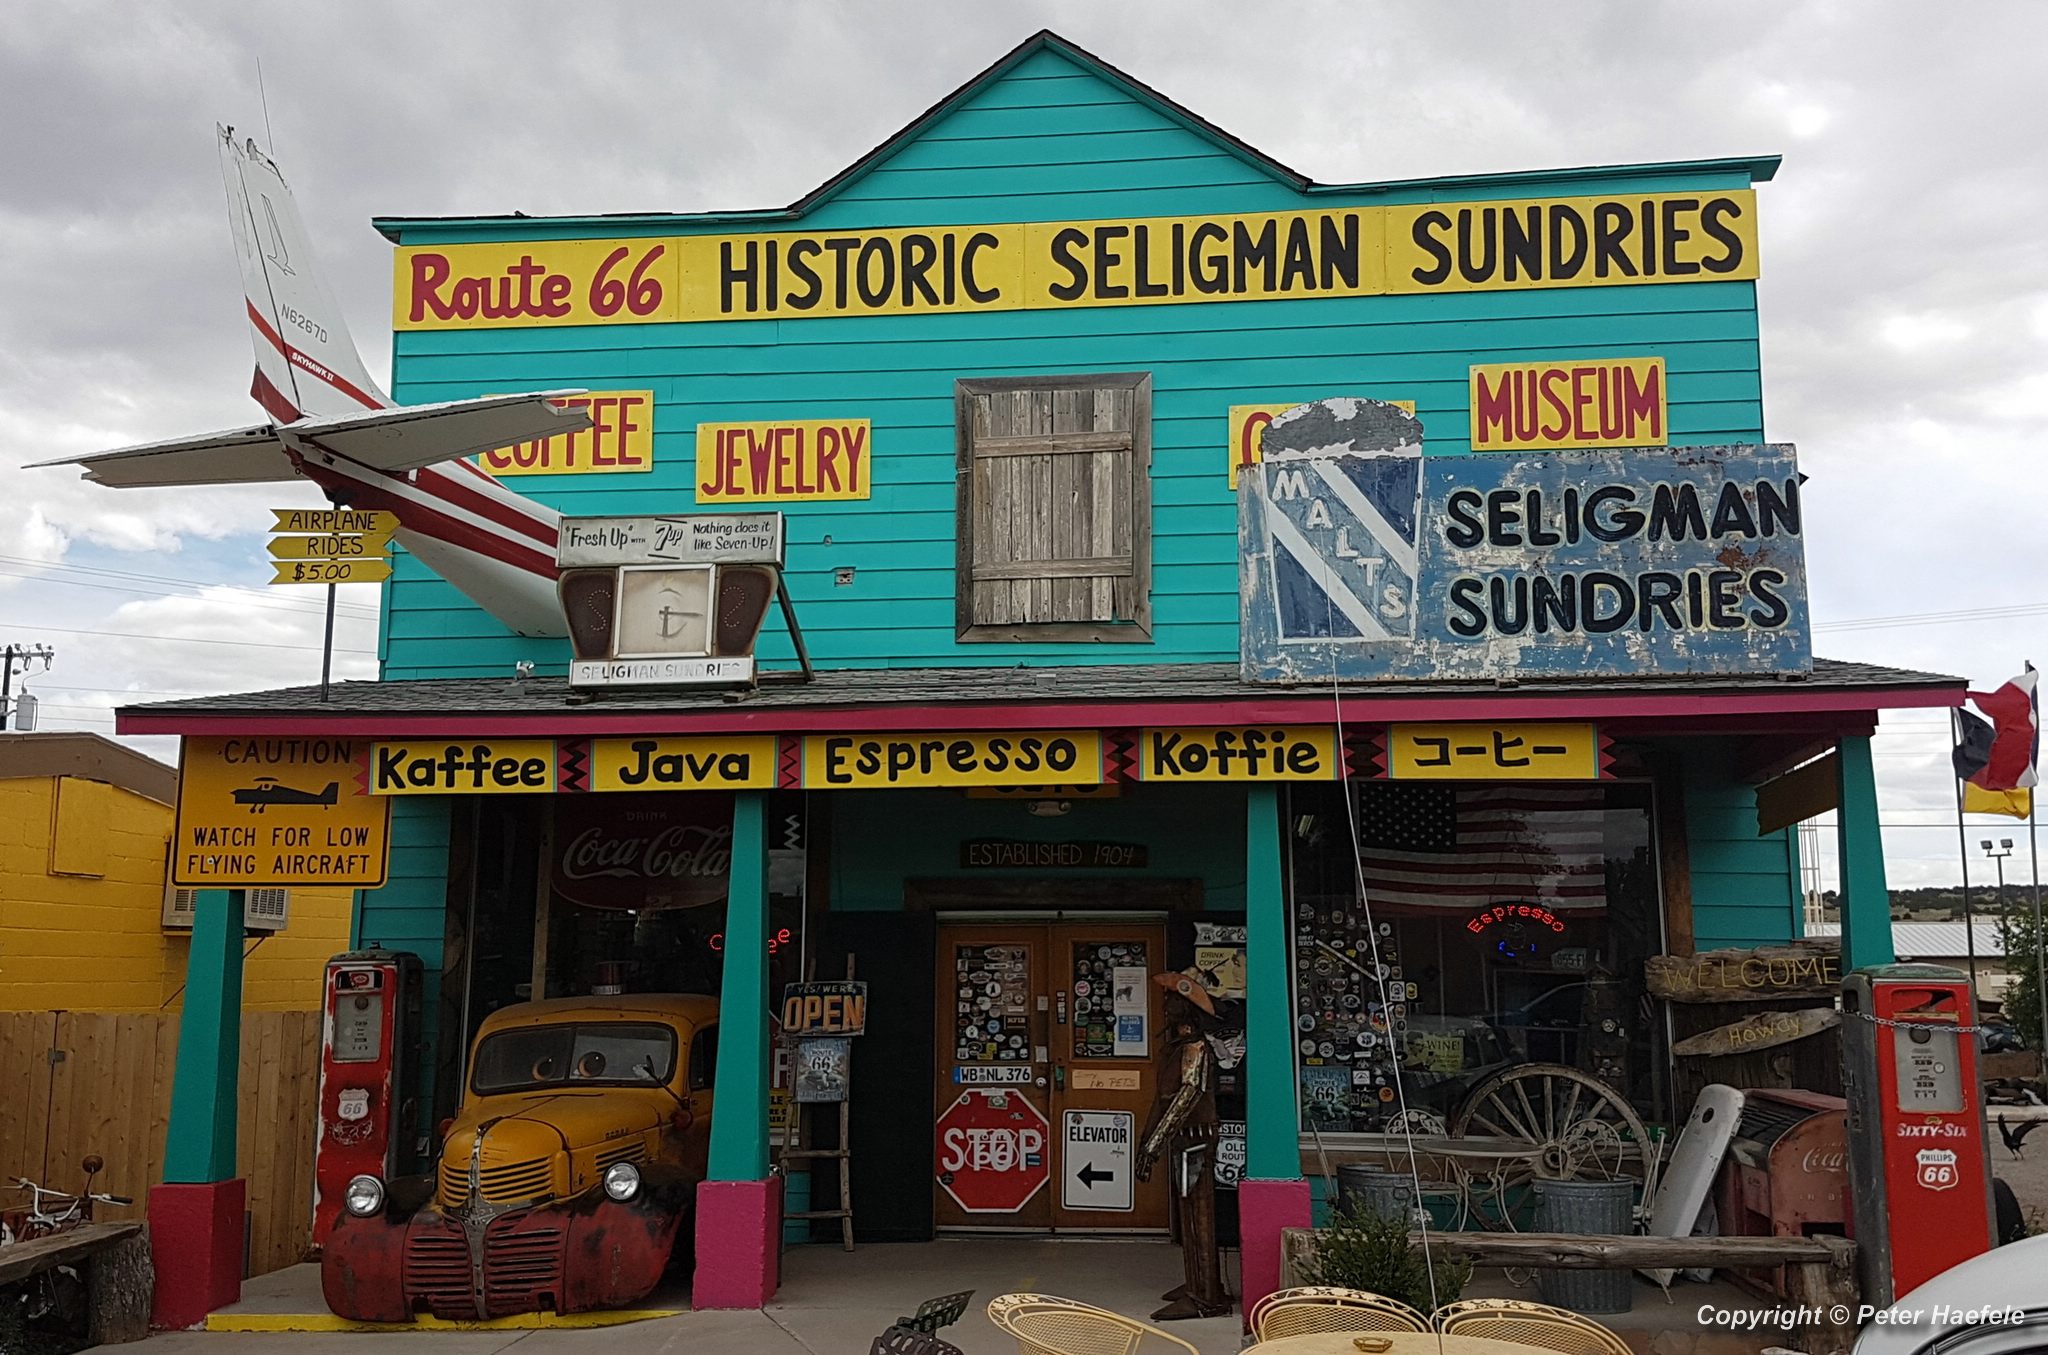 Roadtrip USA - Seligman - Birthplace of Historic Route 66